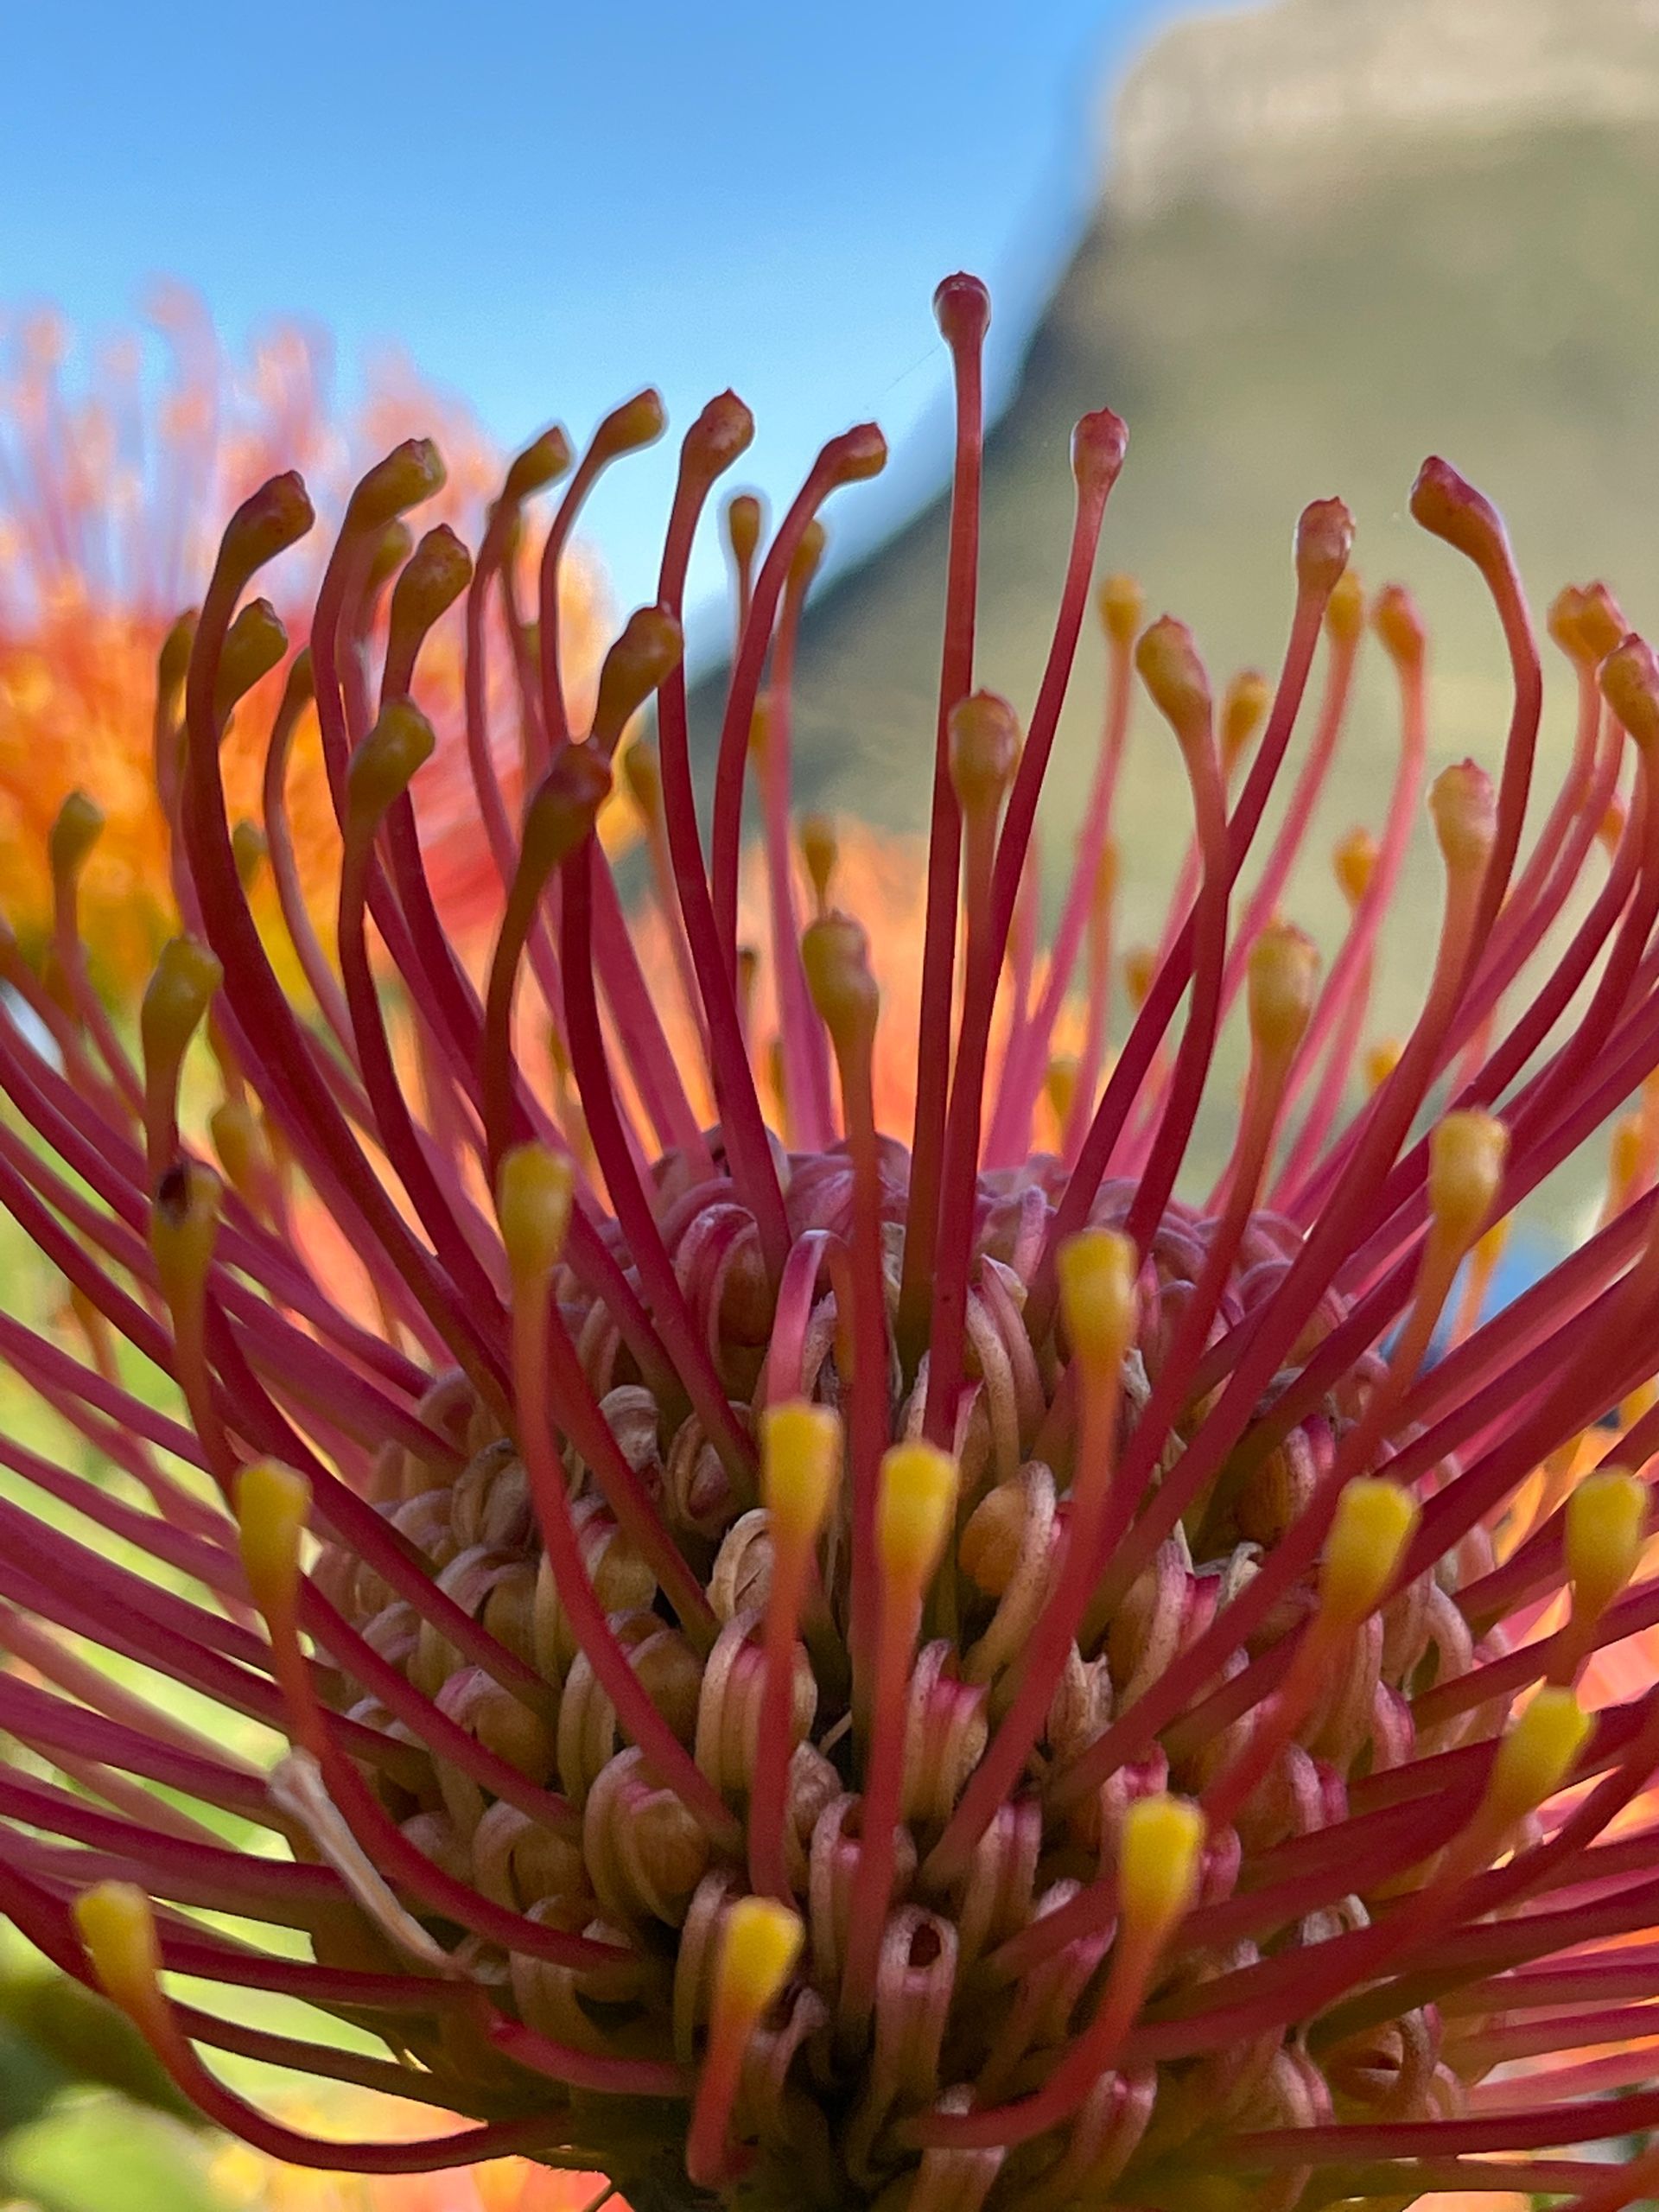 Red Pincushion Protea